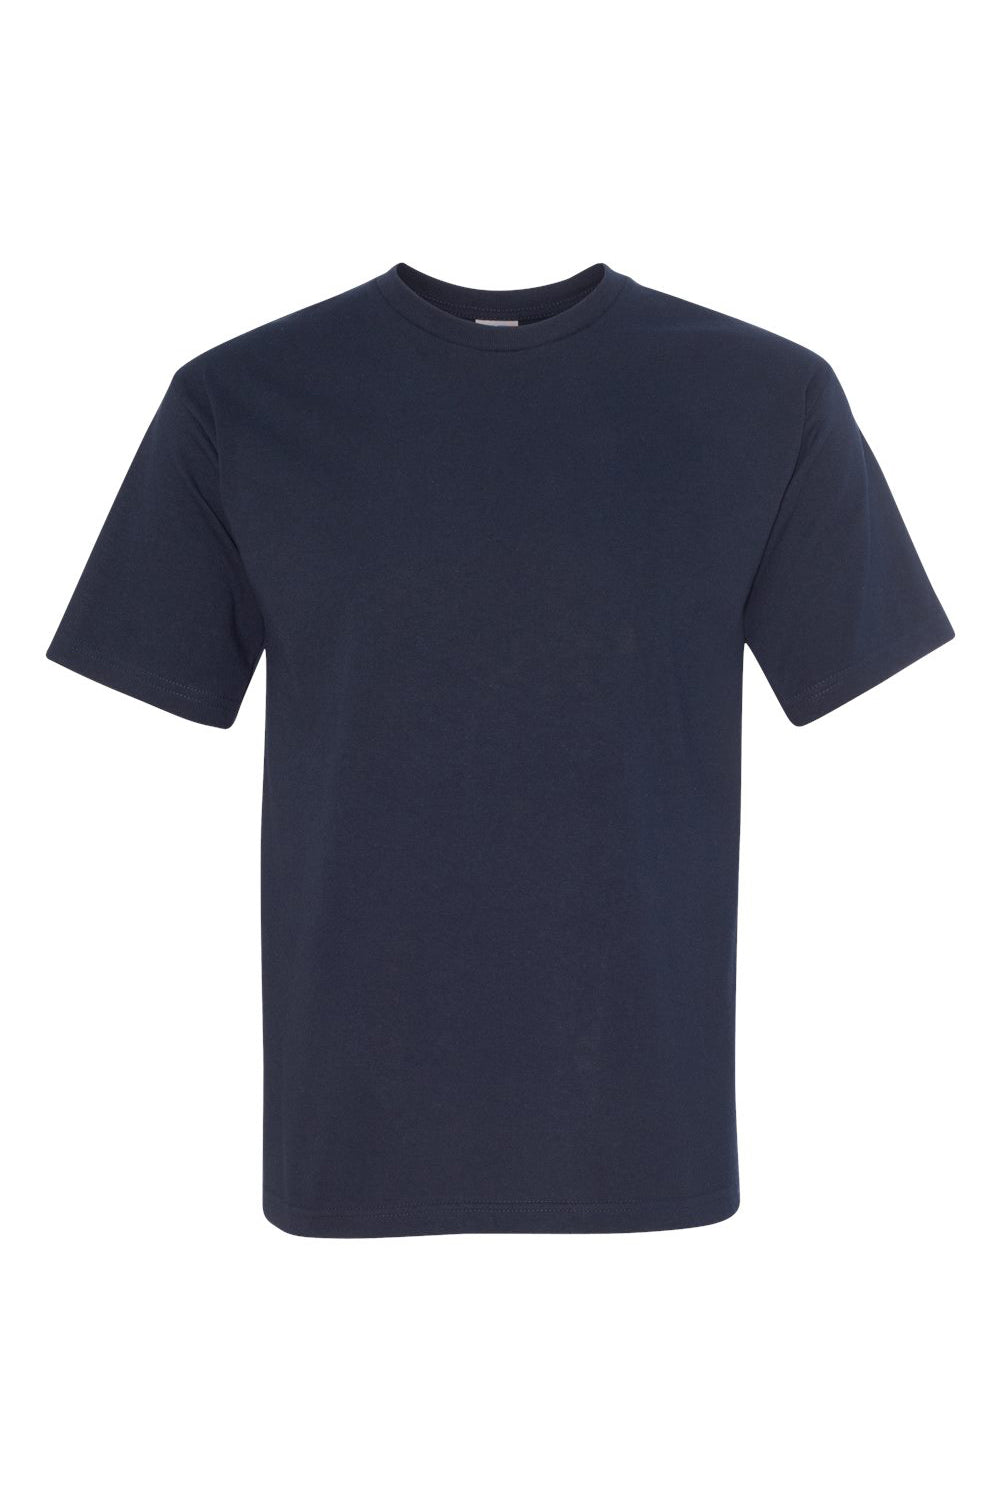 Bayside BA5040 Mens USA Made Short Sleeve Crewneck T-Shirt Dark Navy Blue Flat Front